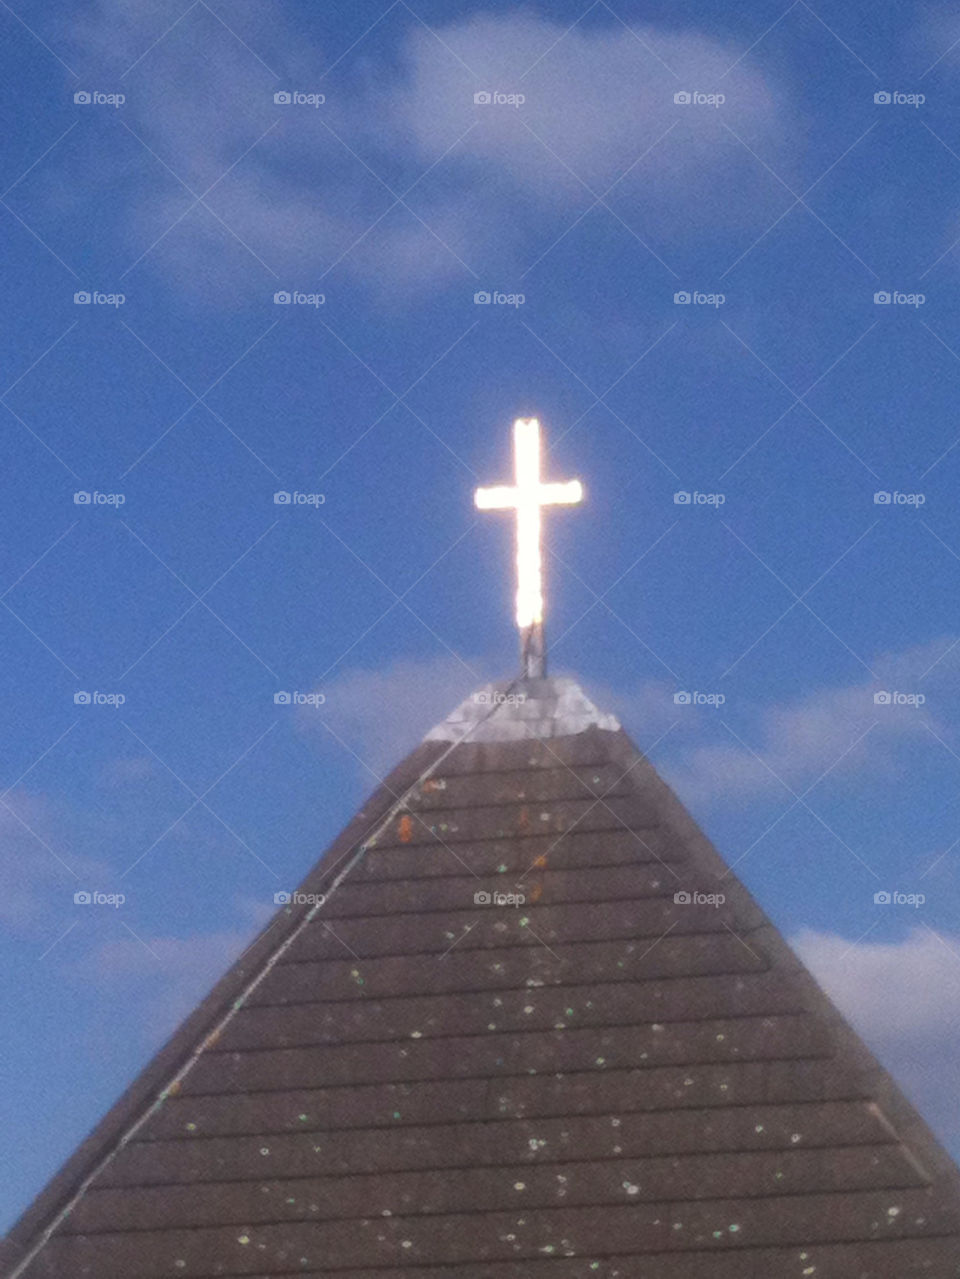 sky light church roof by Joseph_Cooper